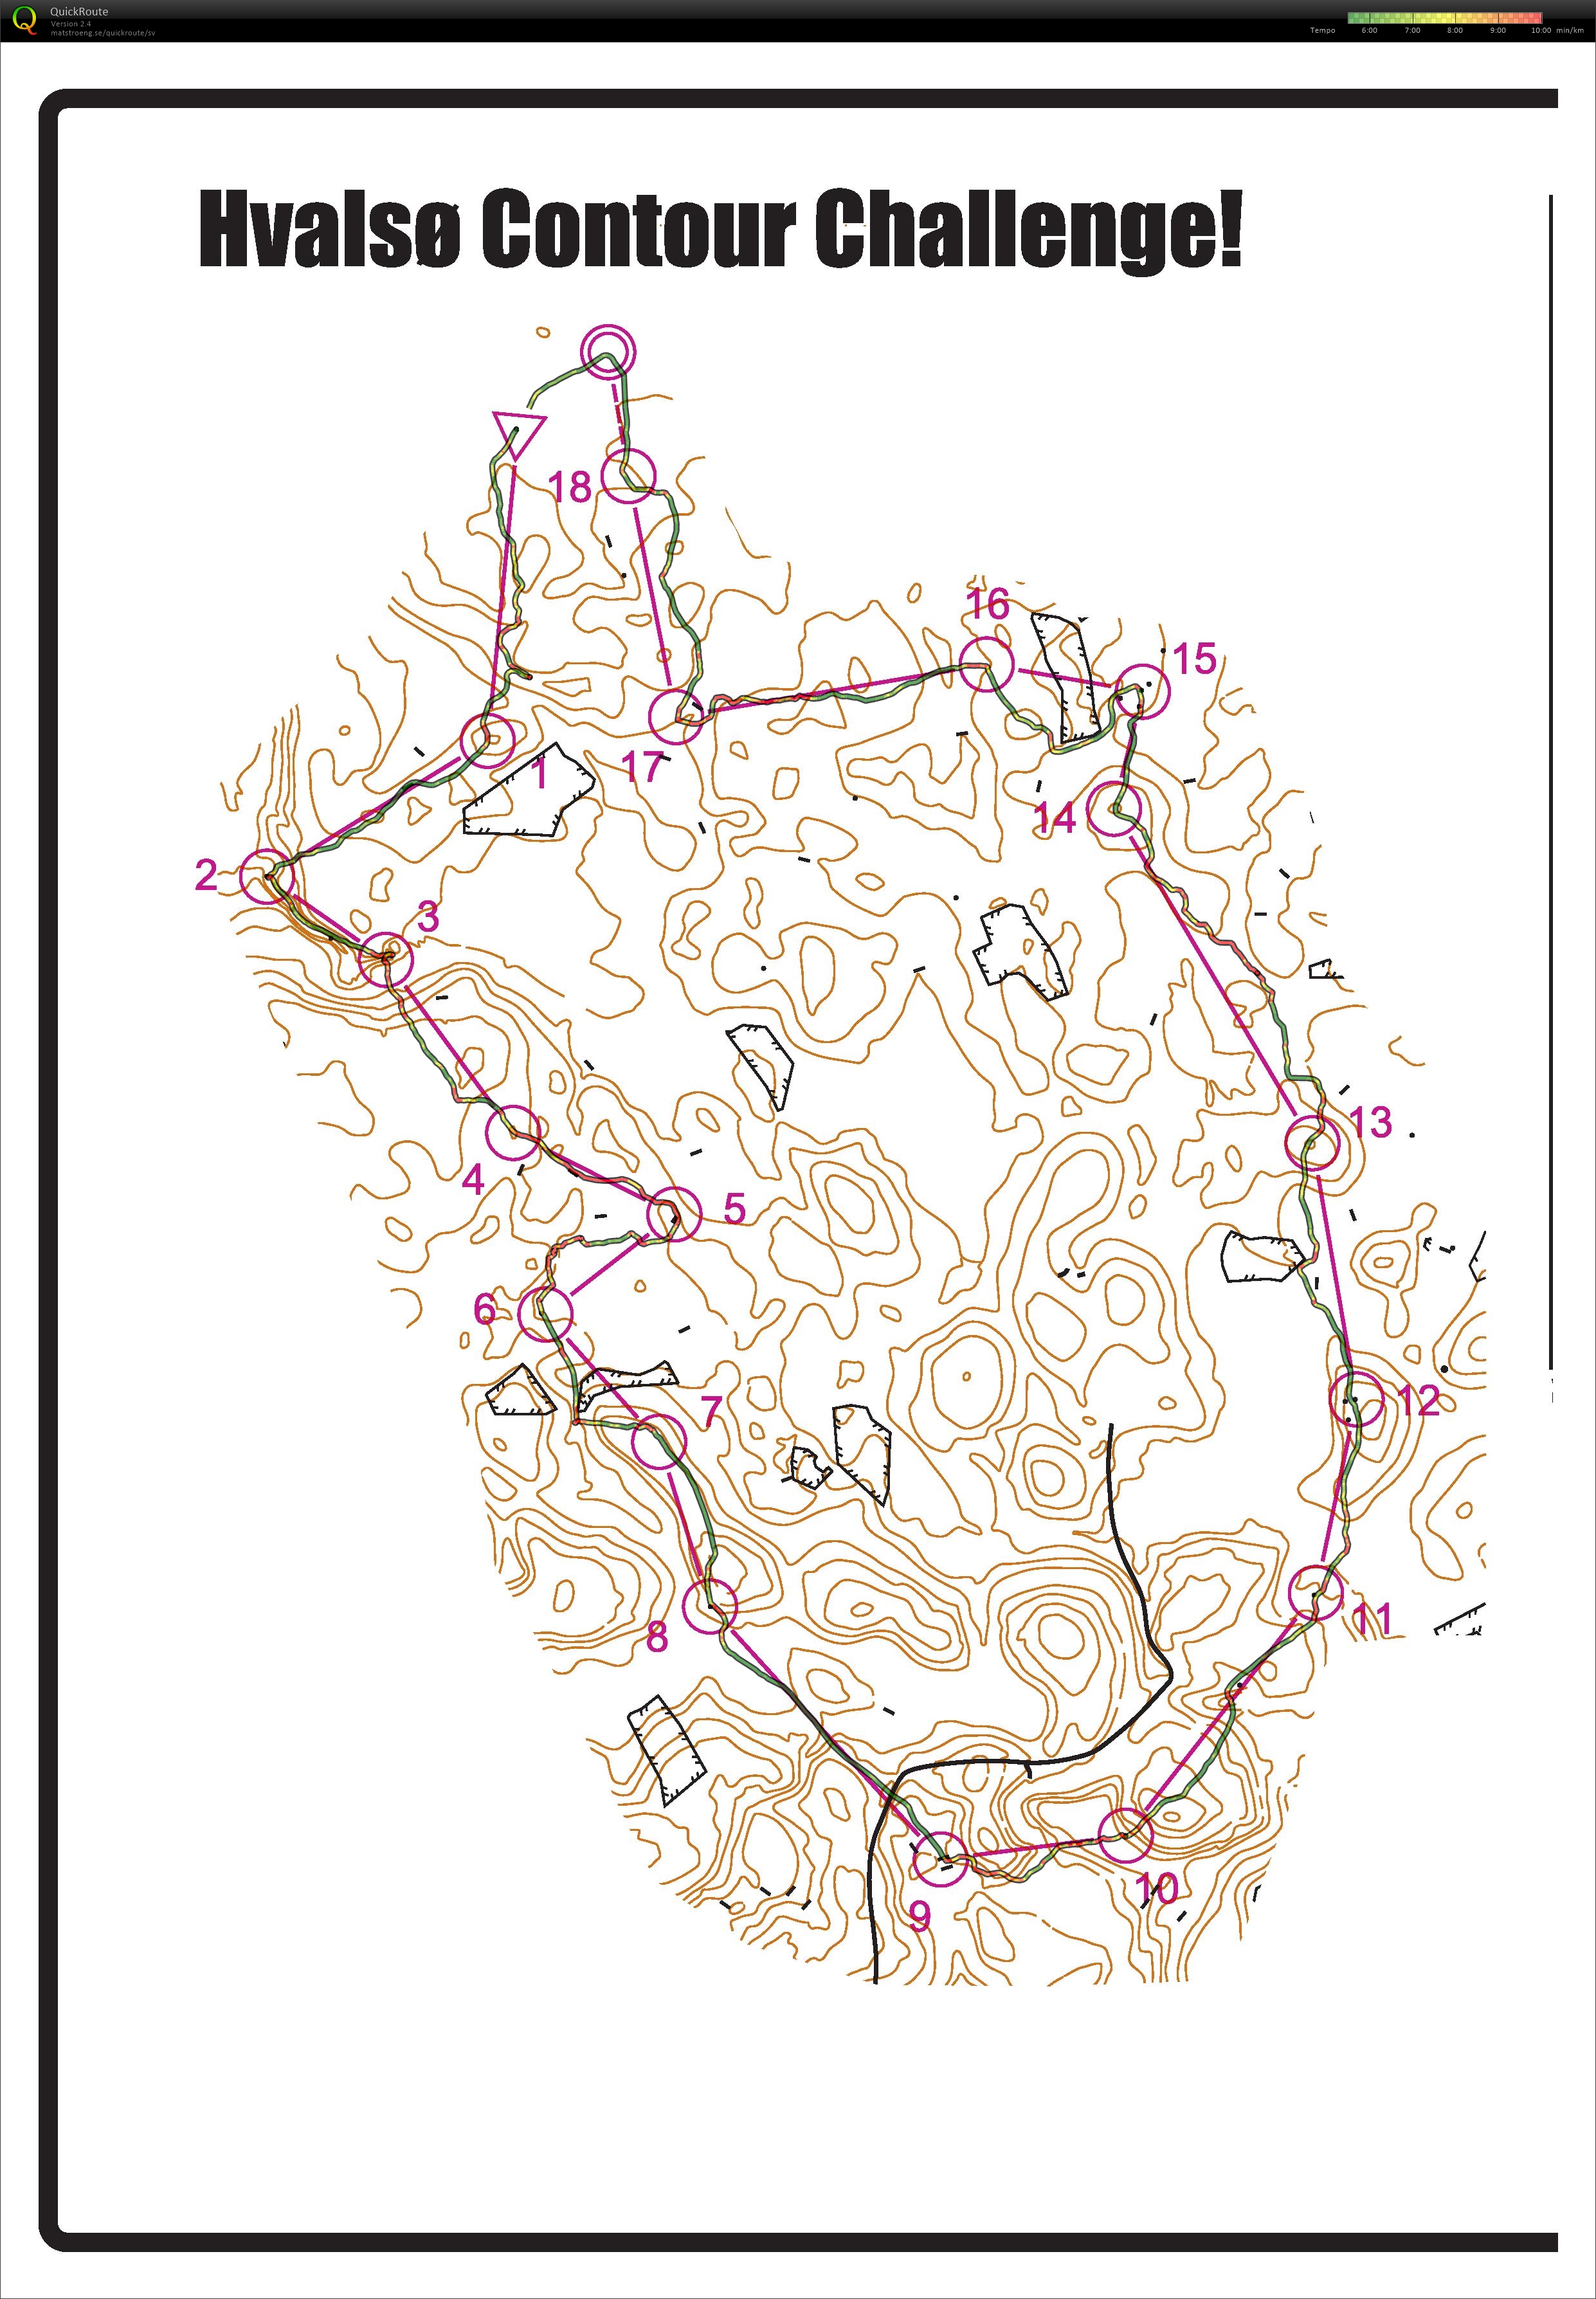 Hvalsø contour challenge (18/02/2017)